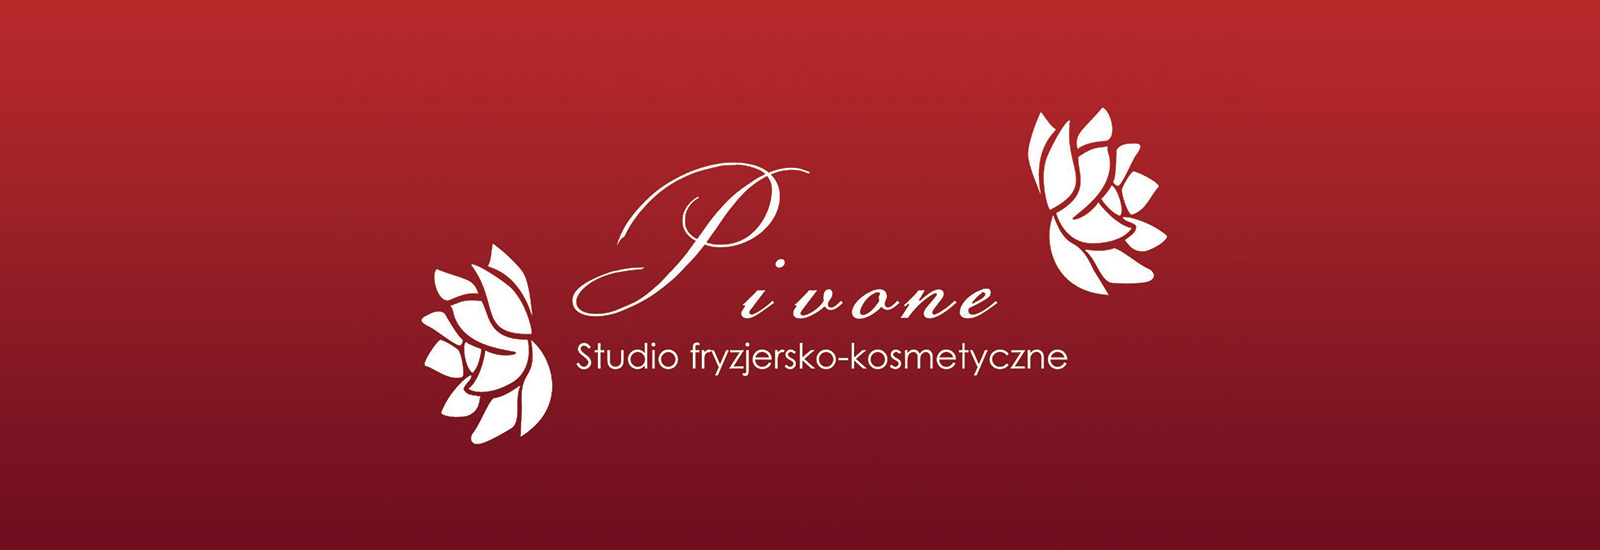 Studio Pivone 